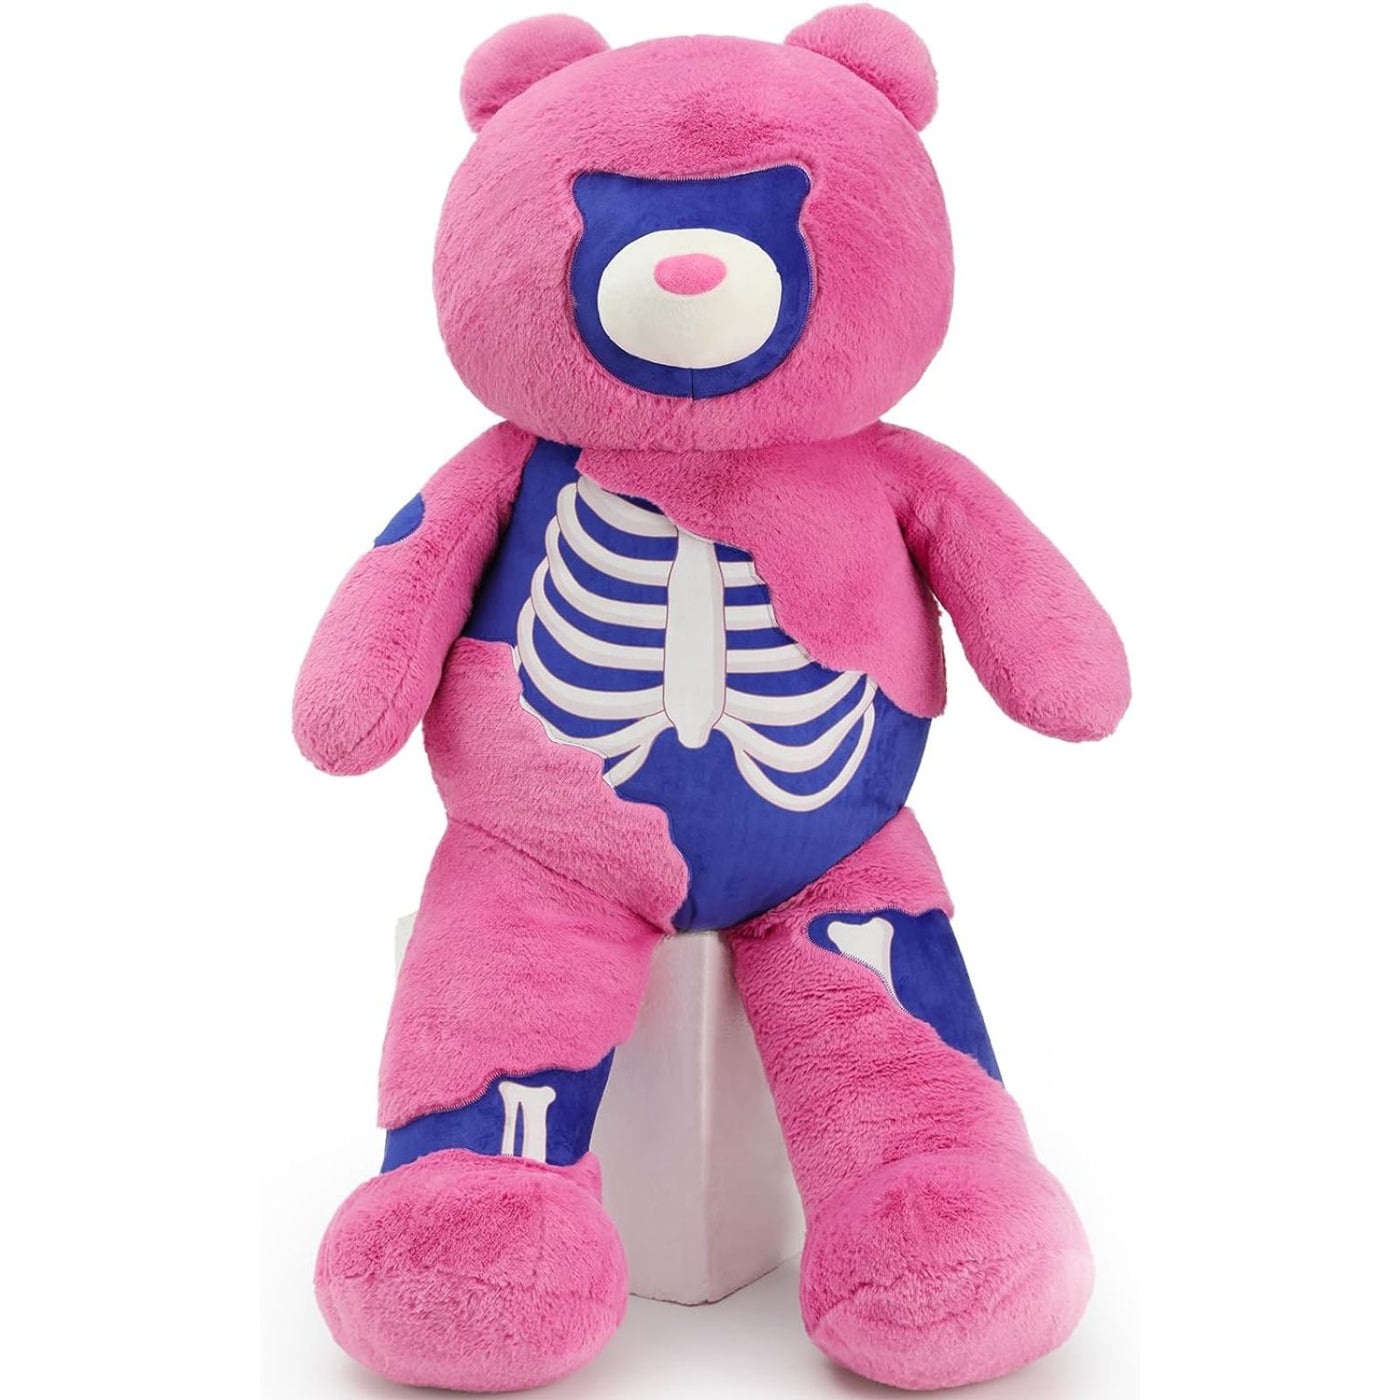 Giant Goth Teddy Bear, Pink, 43 Inches